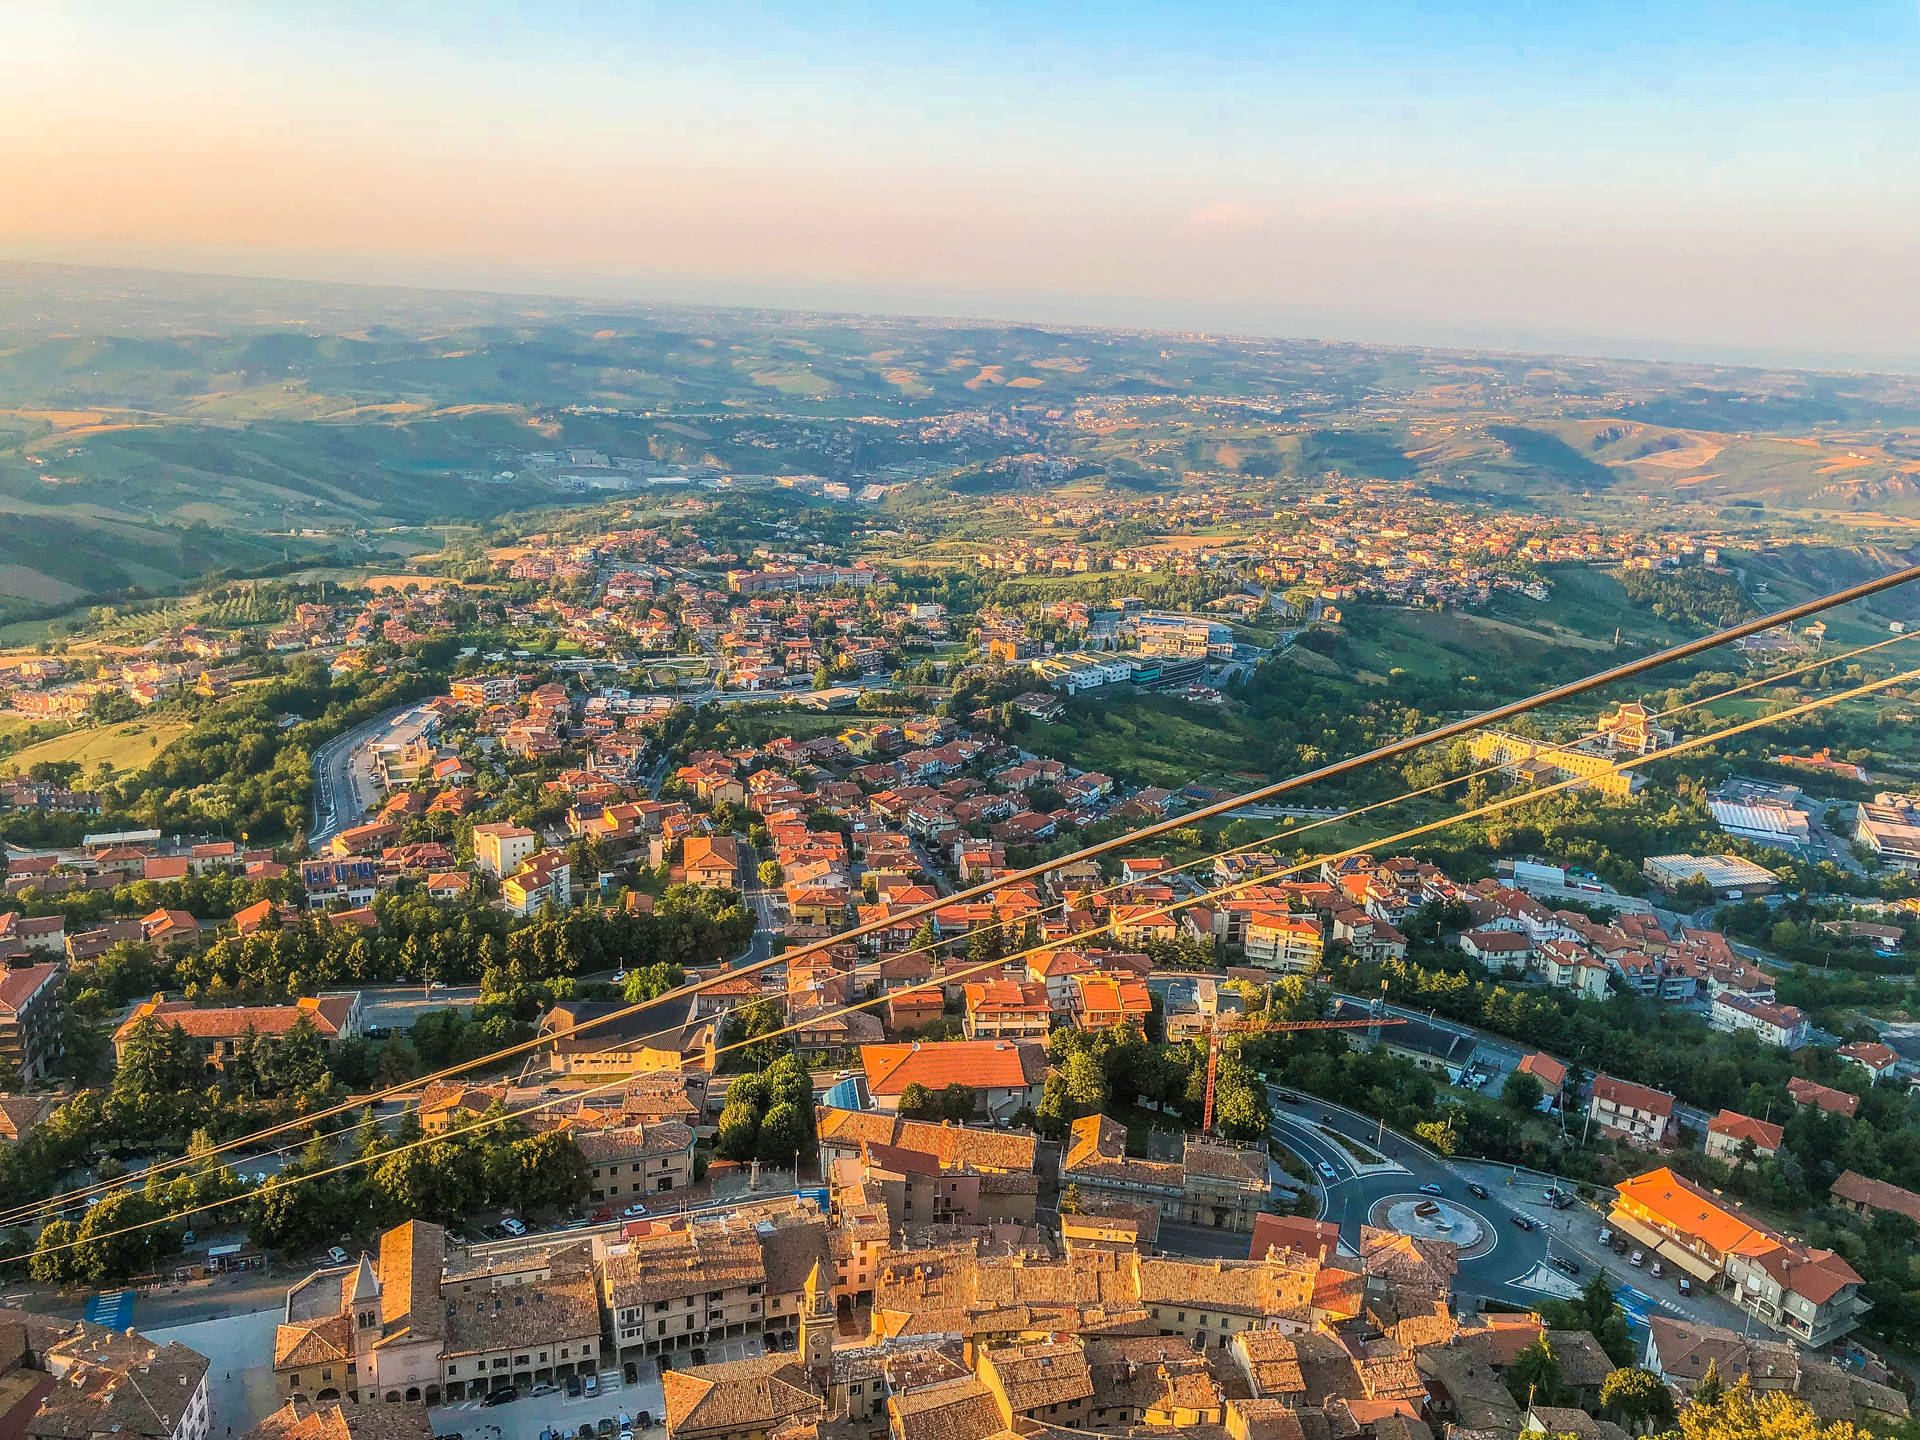 San Marino Forlì Cesena Aerial View Wallpaper